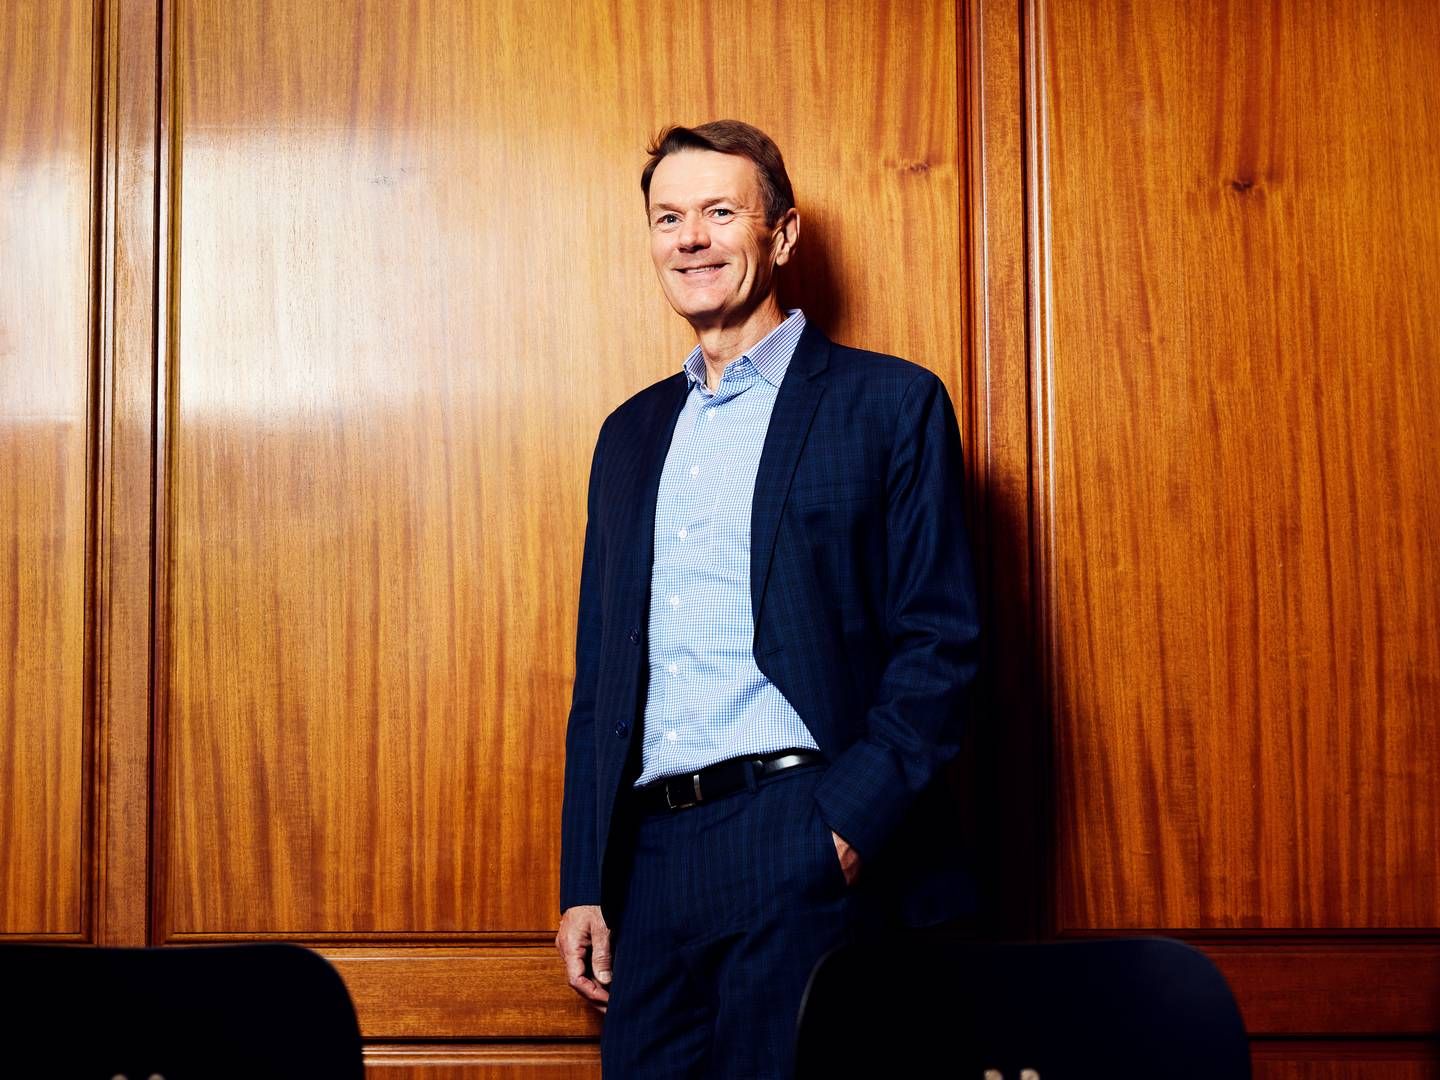 BankInvest CEO Lars Bo Bertram | Photo: Pr/bankinvest